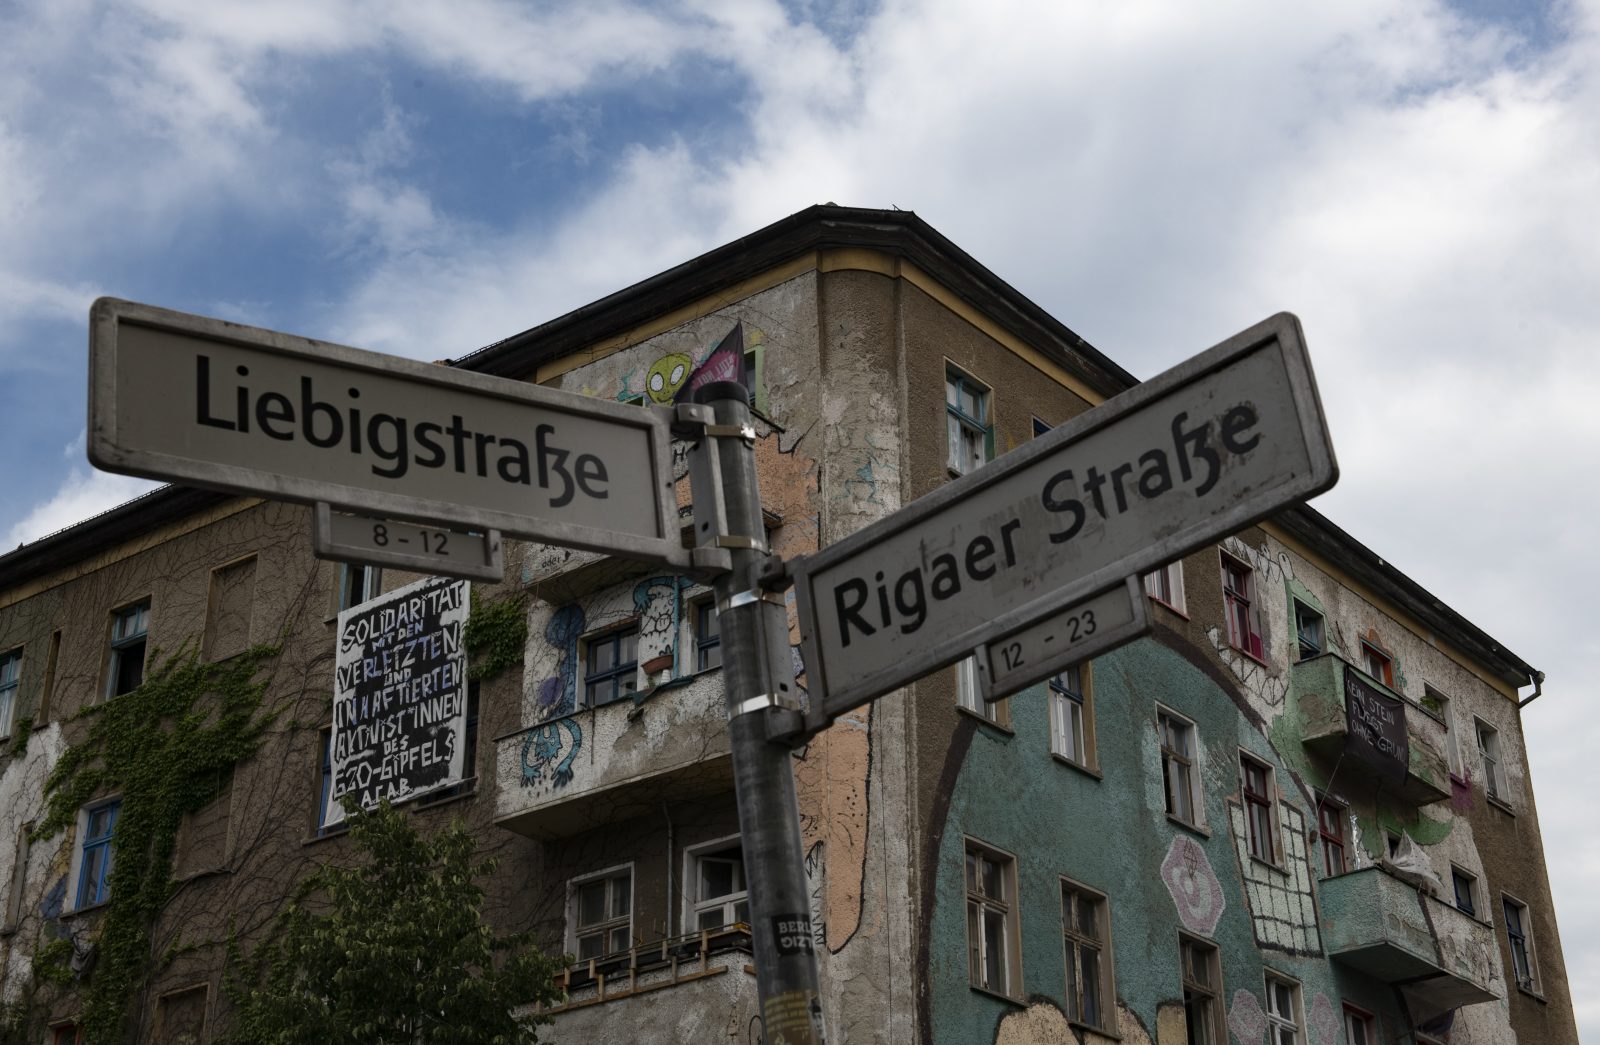 Liebigstraße